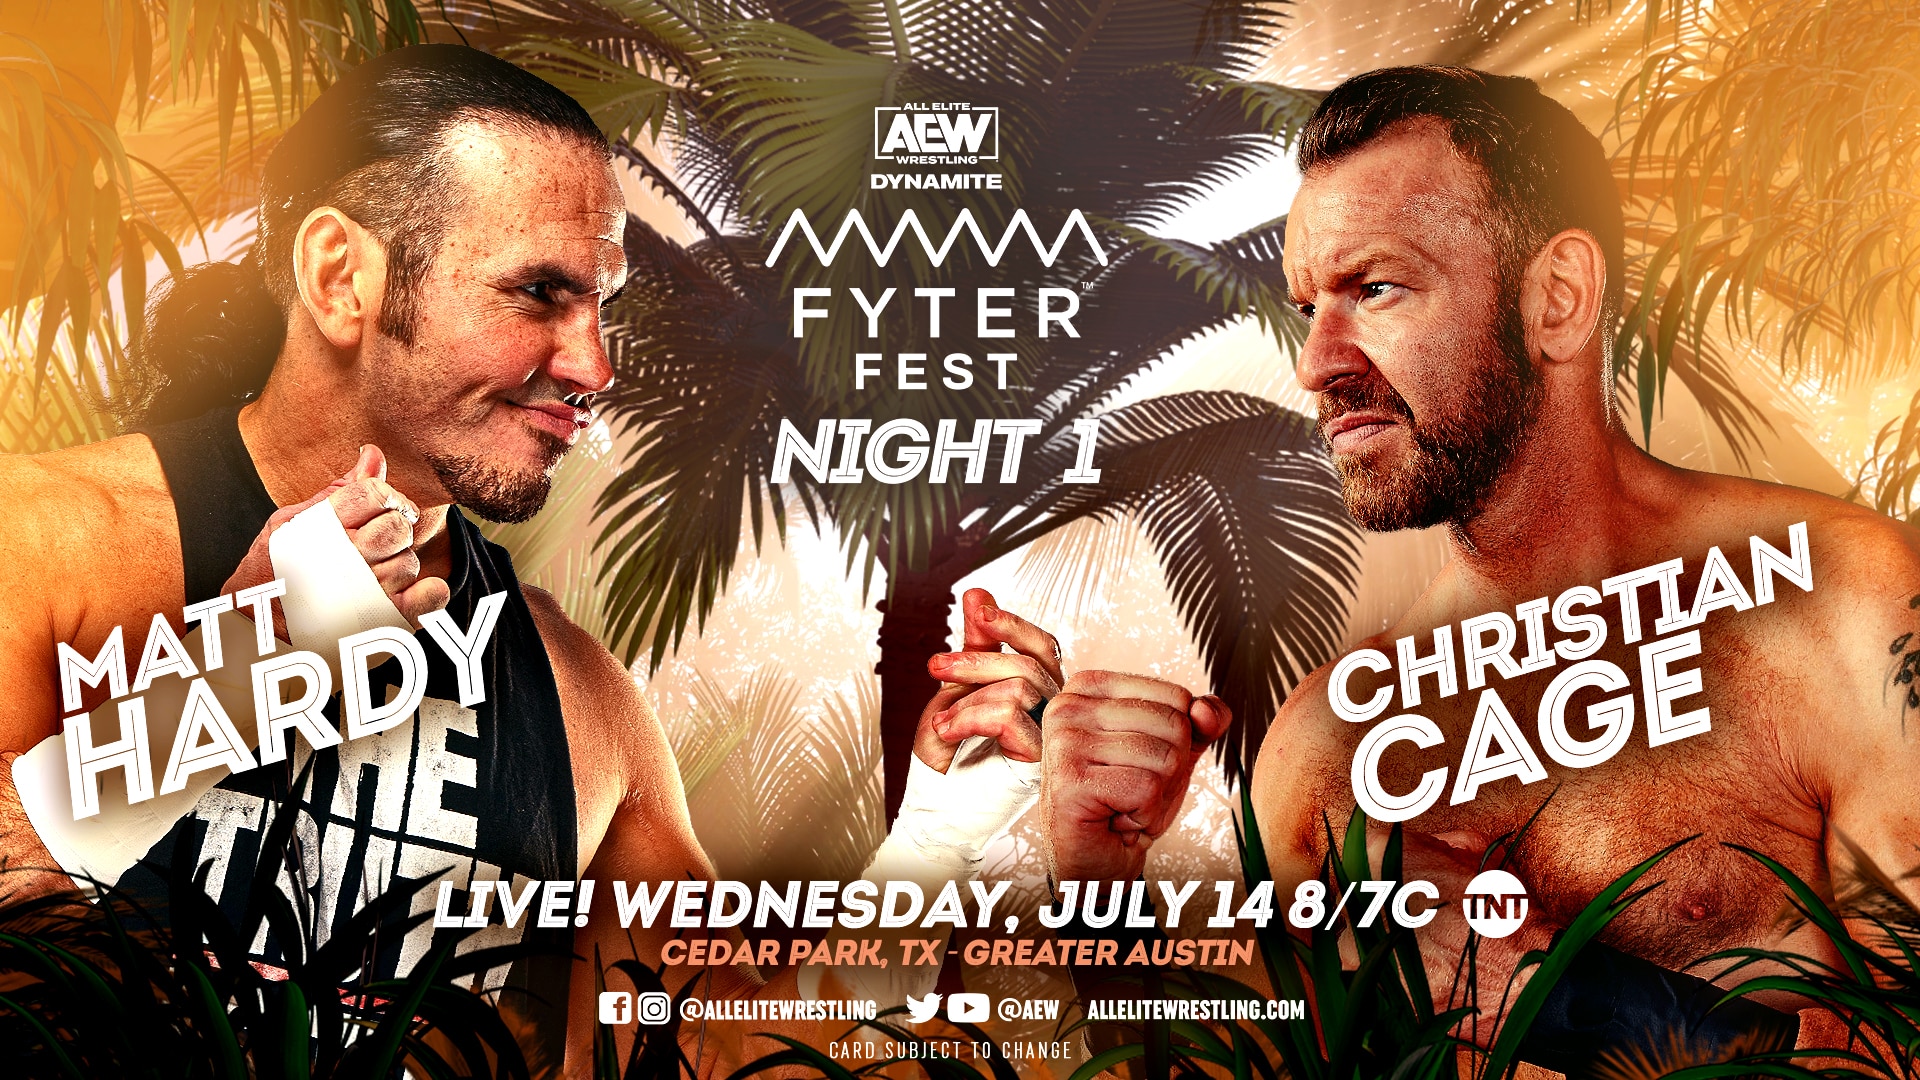 Matt Hardy vs Christian Cage